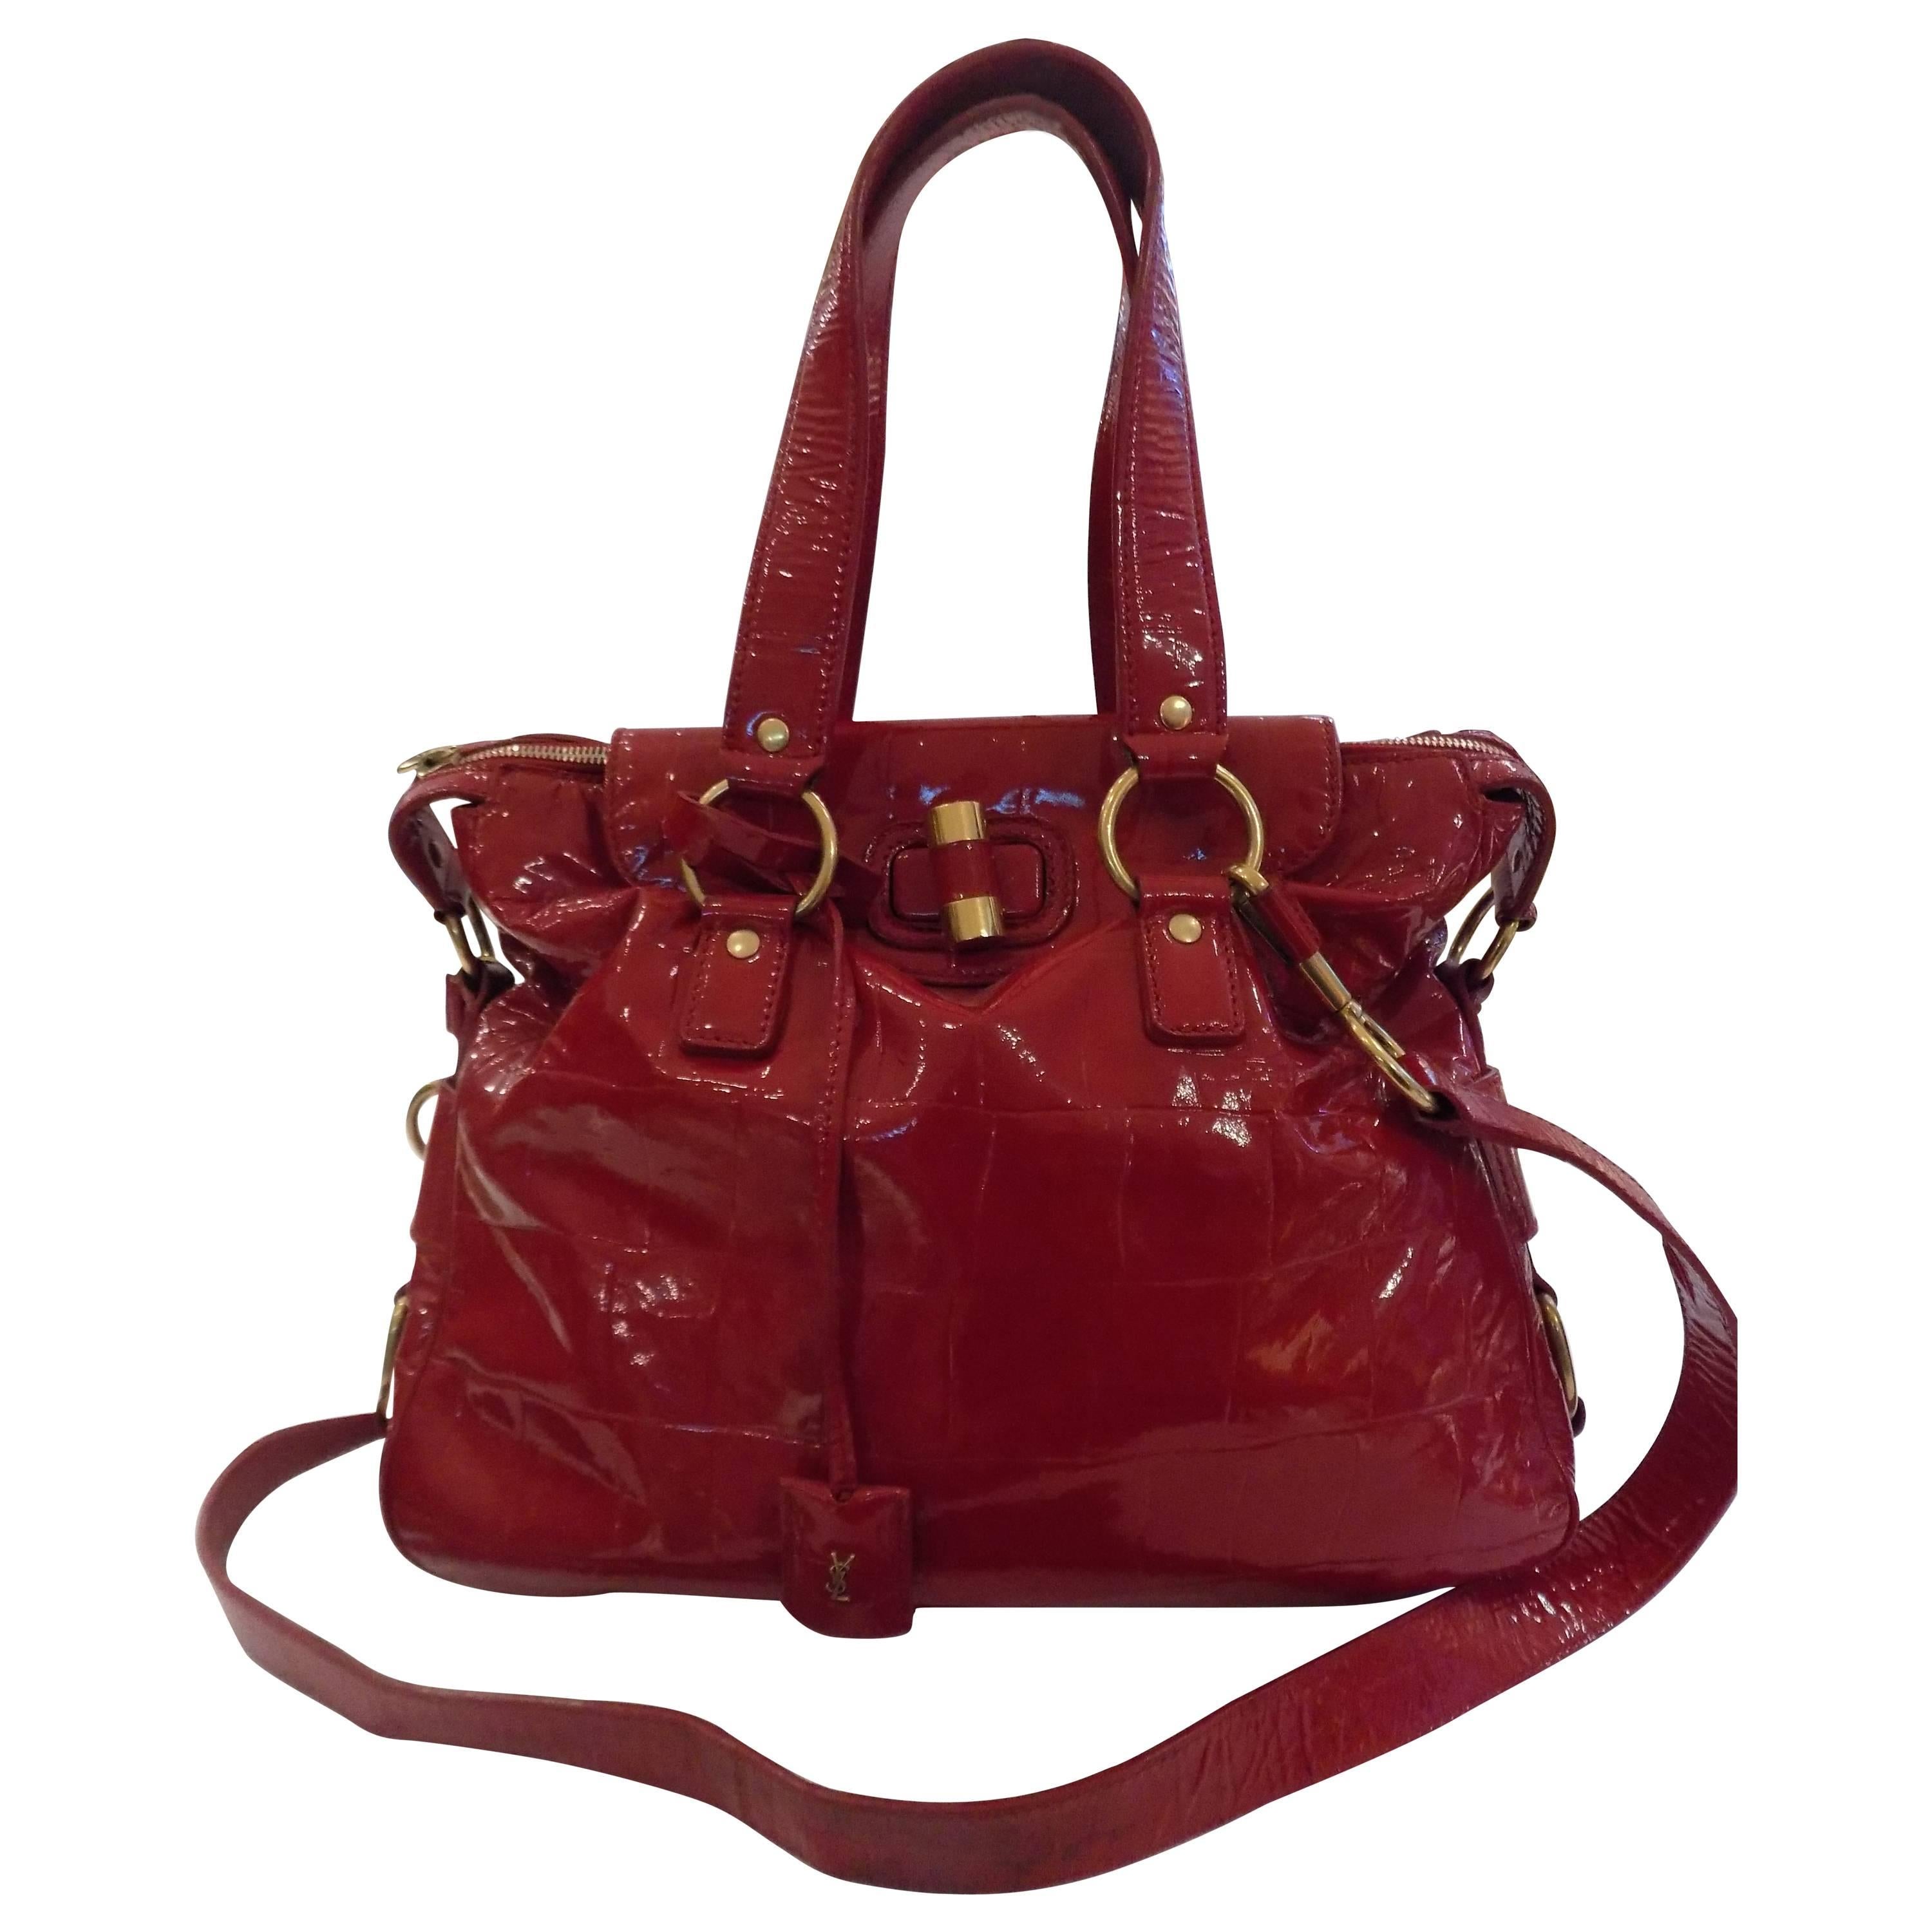 Yves Saint Laurent Red Varnish Leather Bag